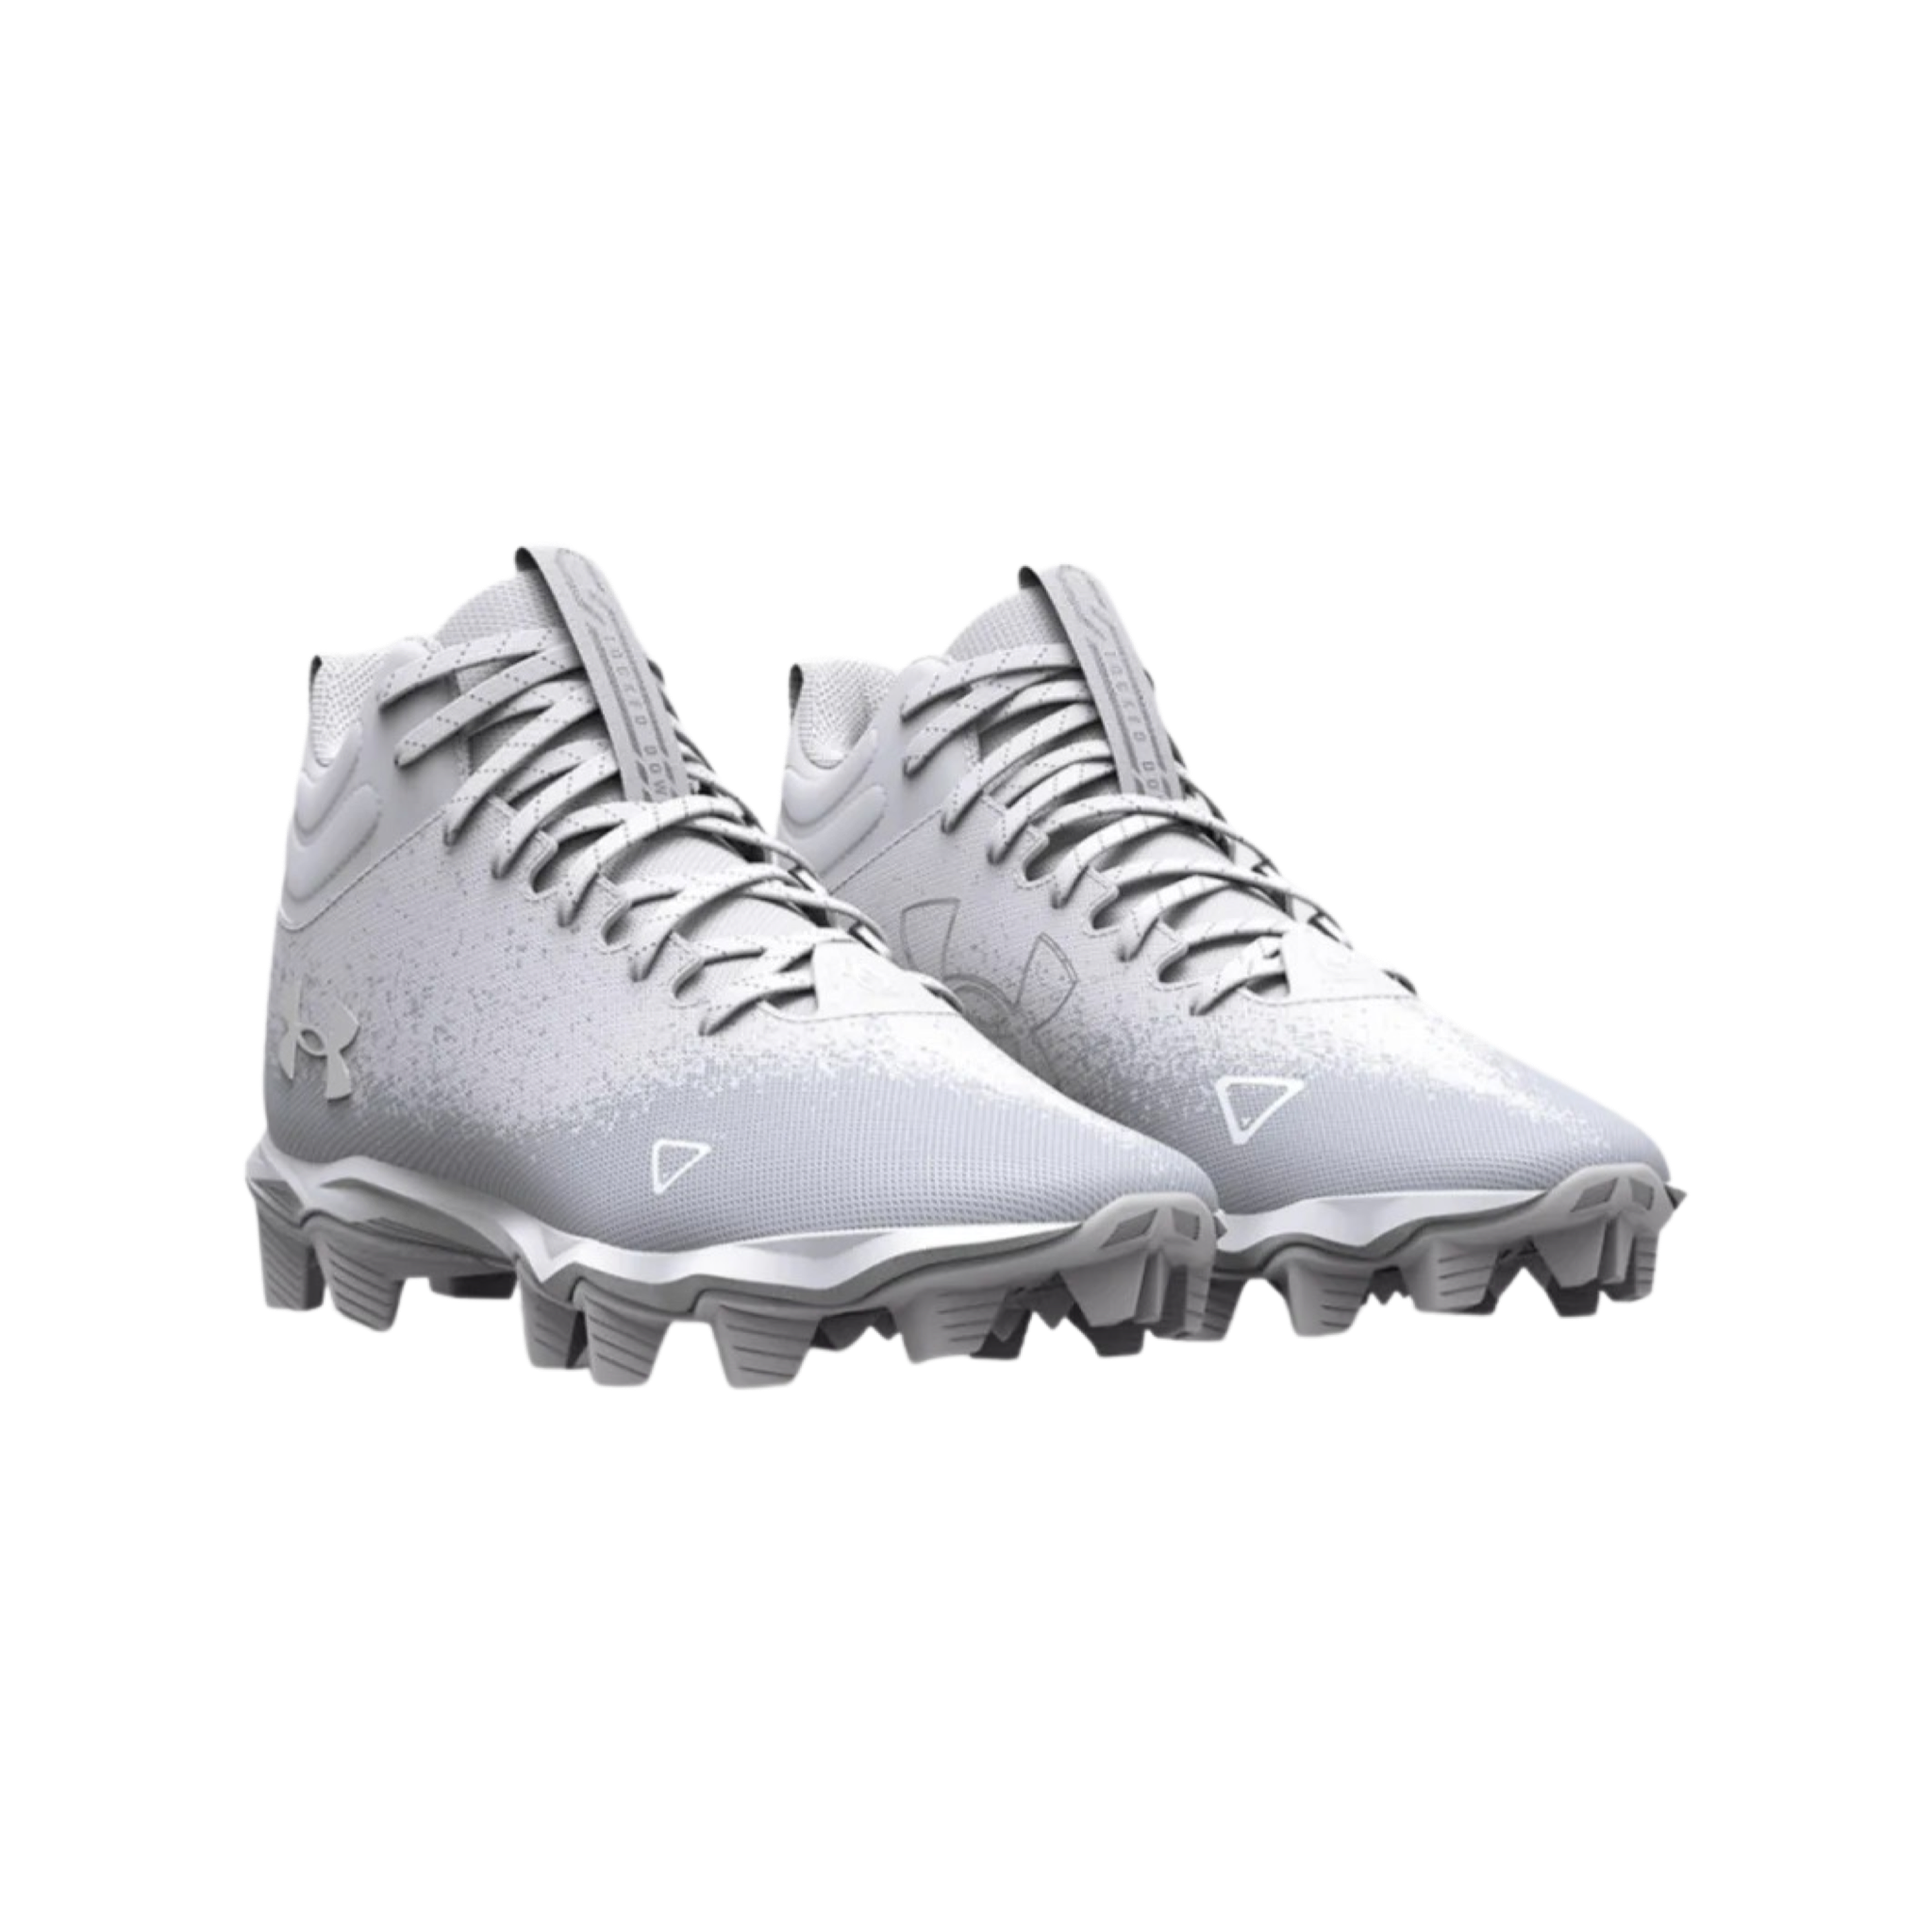 Under Armor Kids' Spotlight Franchise RM Football Cleats - White-Children's football shoe in white color